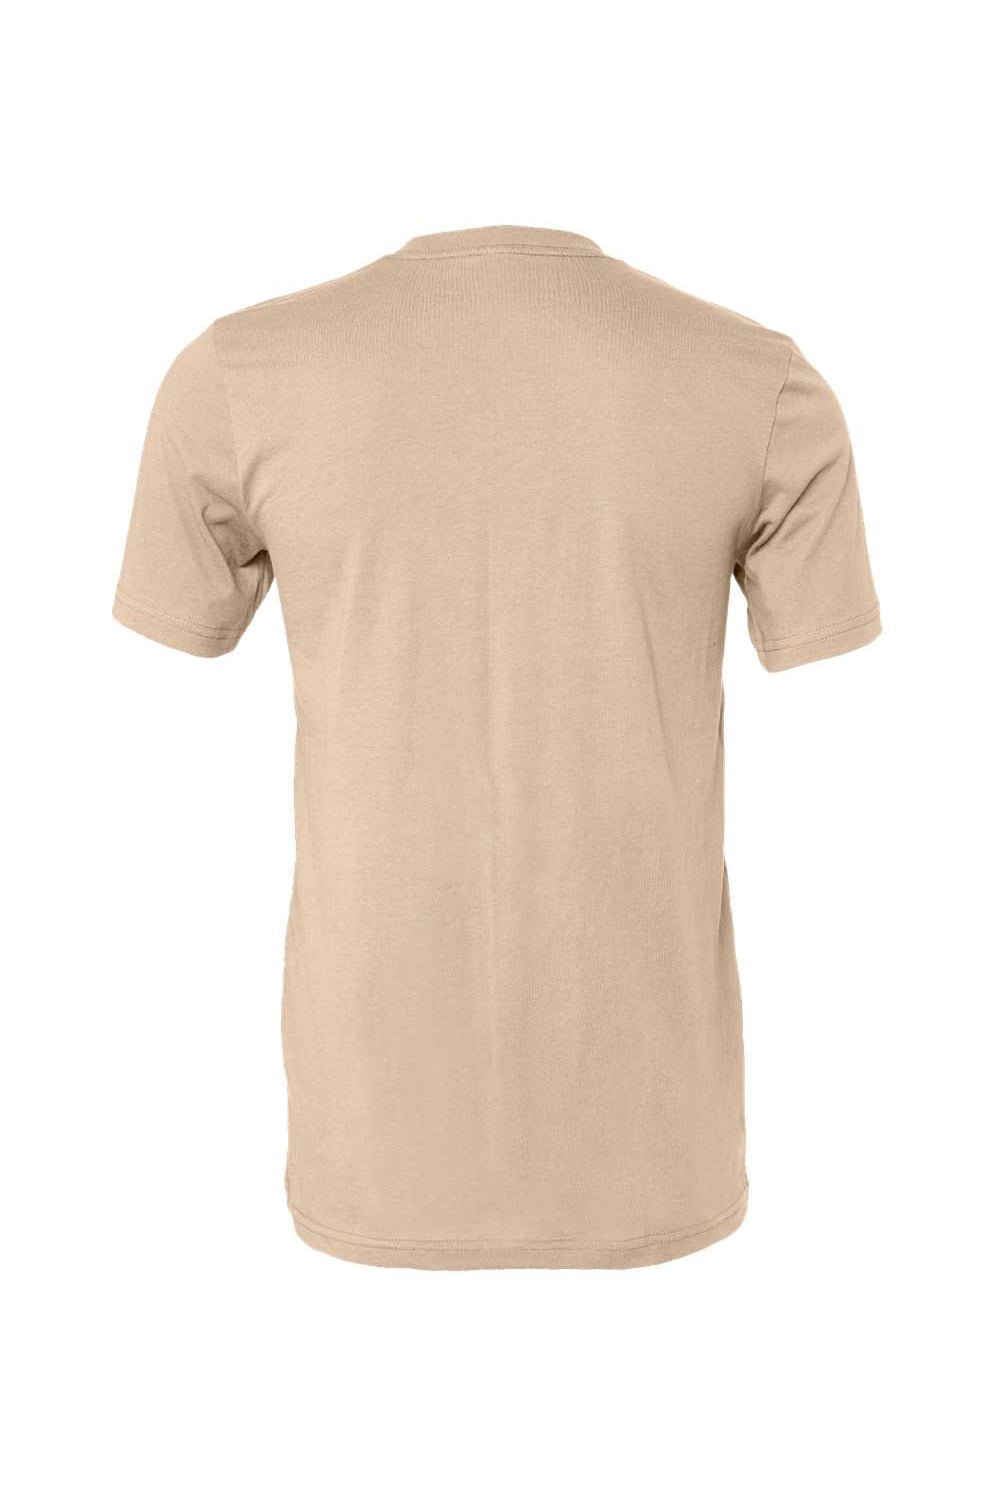 Bella + Canvas BC3001/3001C Mens Jersey Short Sleeve Crewneck T-Shirt Tan Flat Back